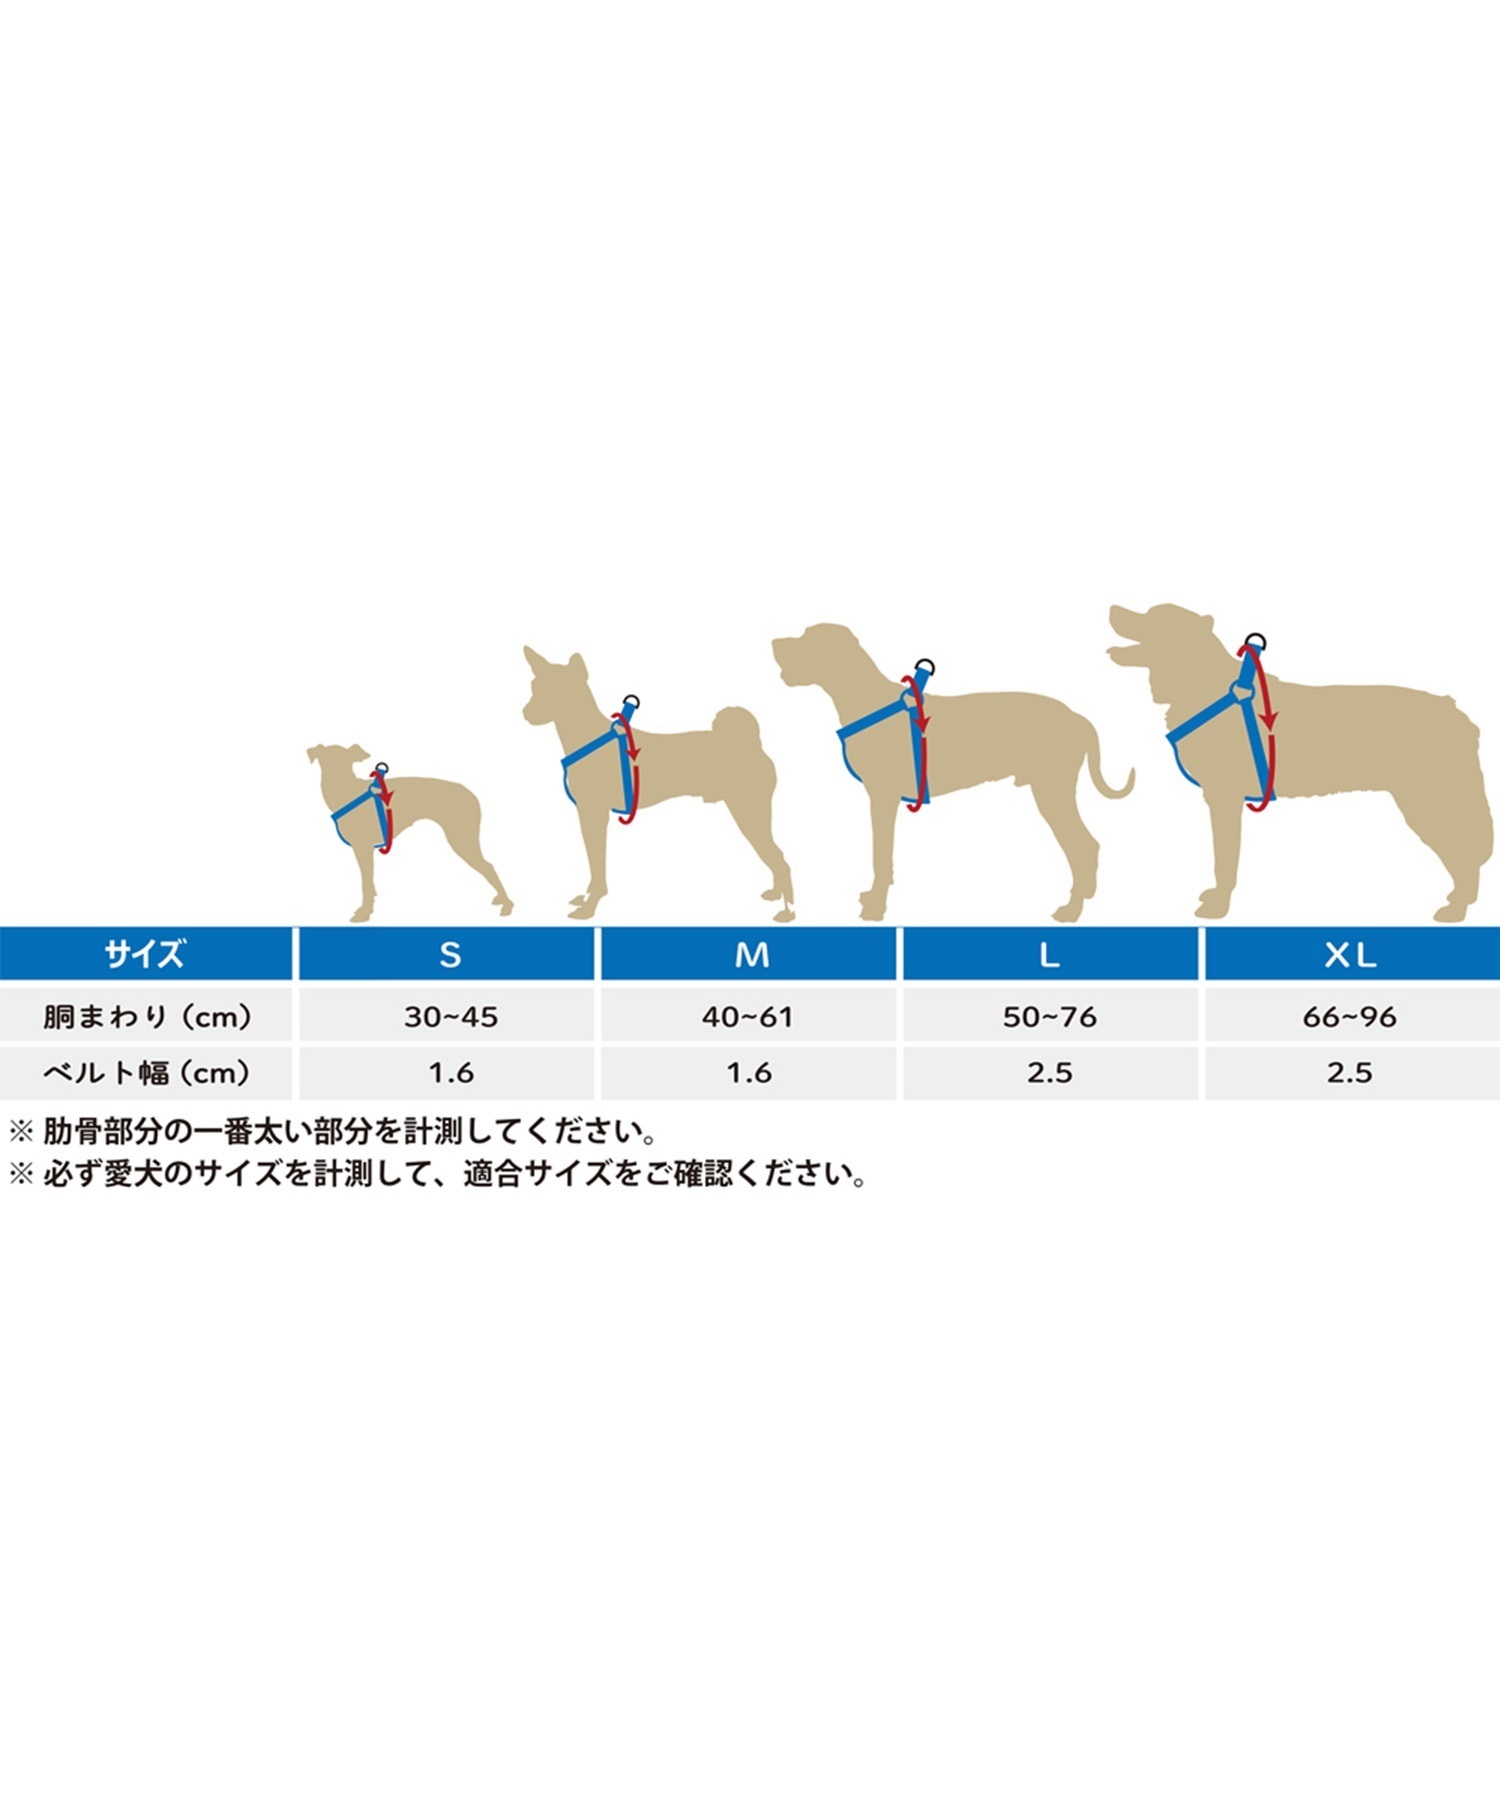 WOLFGANG ウルフギャング 犬用 ハーネス MarbleWave Harness Mサイズ 小型犬用 中型犬用 胴輪 マーブルウェイブ ブルー系 WH-002-102(PU-M)